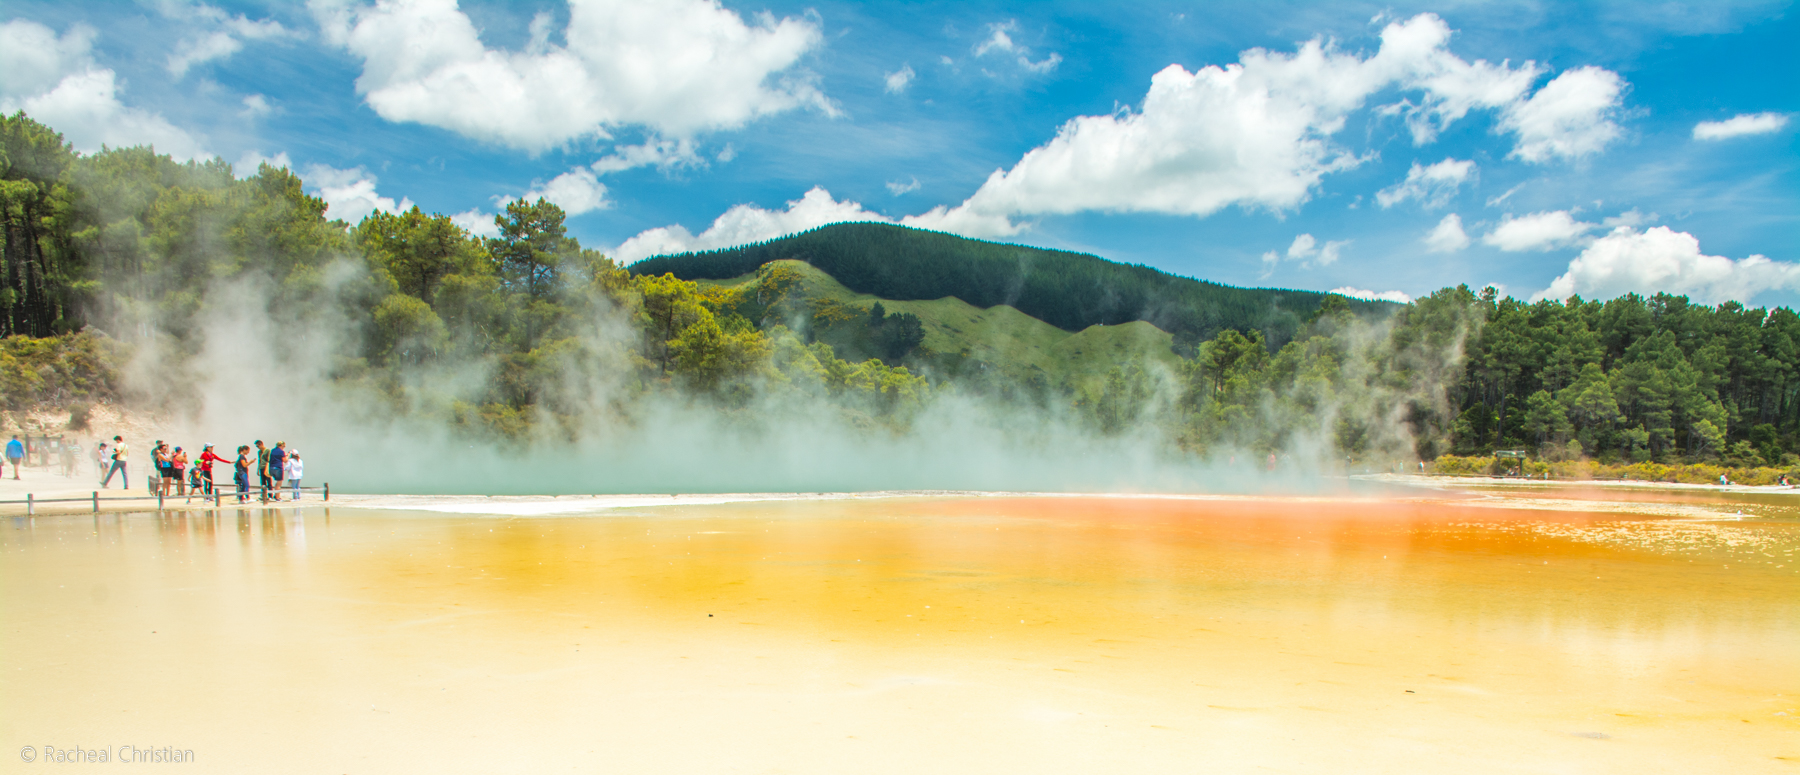 Wai-O-Tapu Thermal Wonderland |Rotorua, New Zealand - Champagne Pool by Racheal Christian